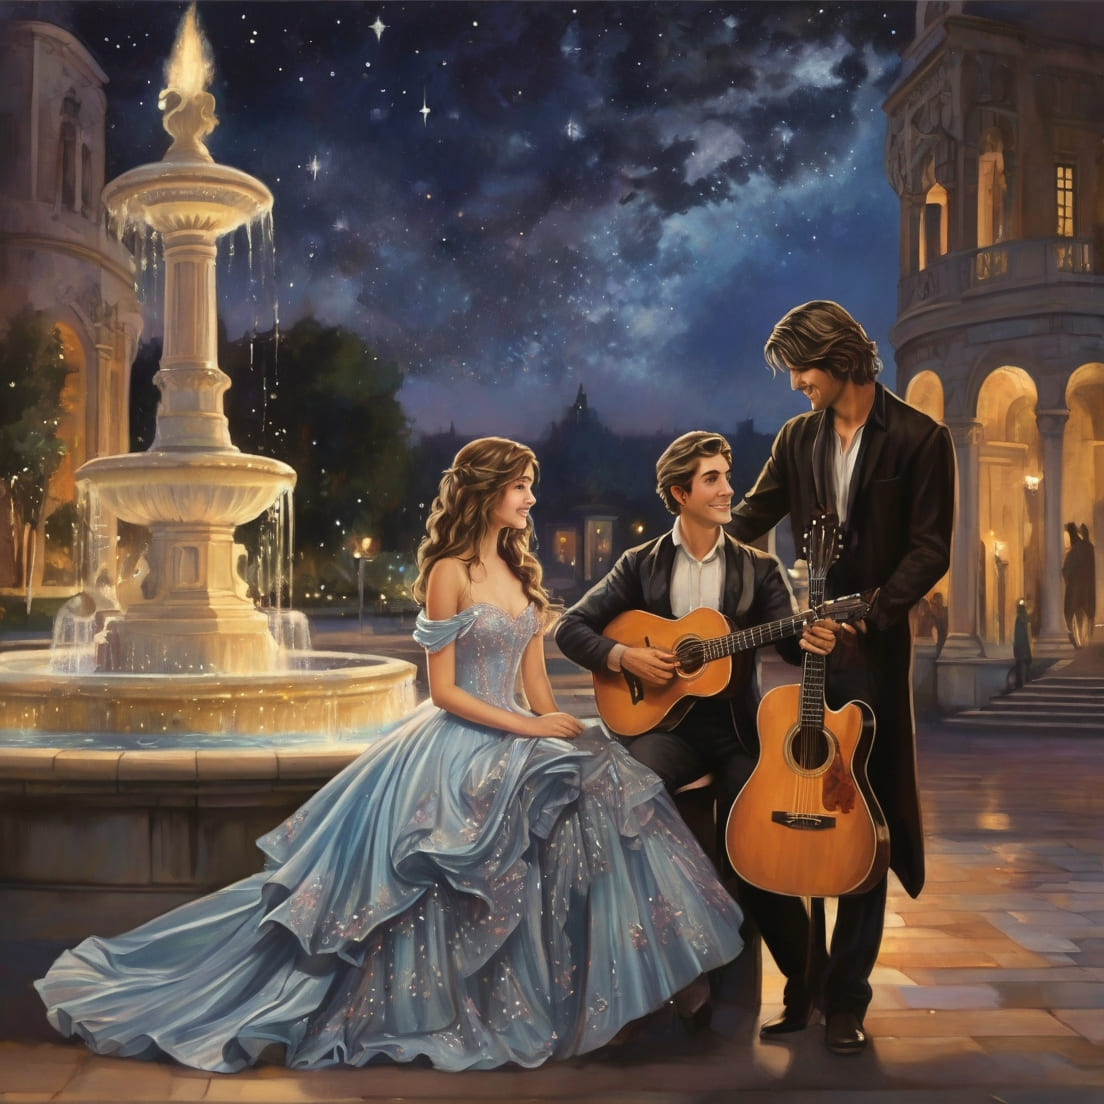 postcard, girl in a ballgown, man, stars, guitar, fountain preview image.